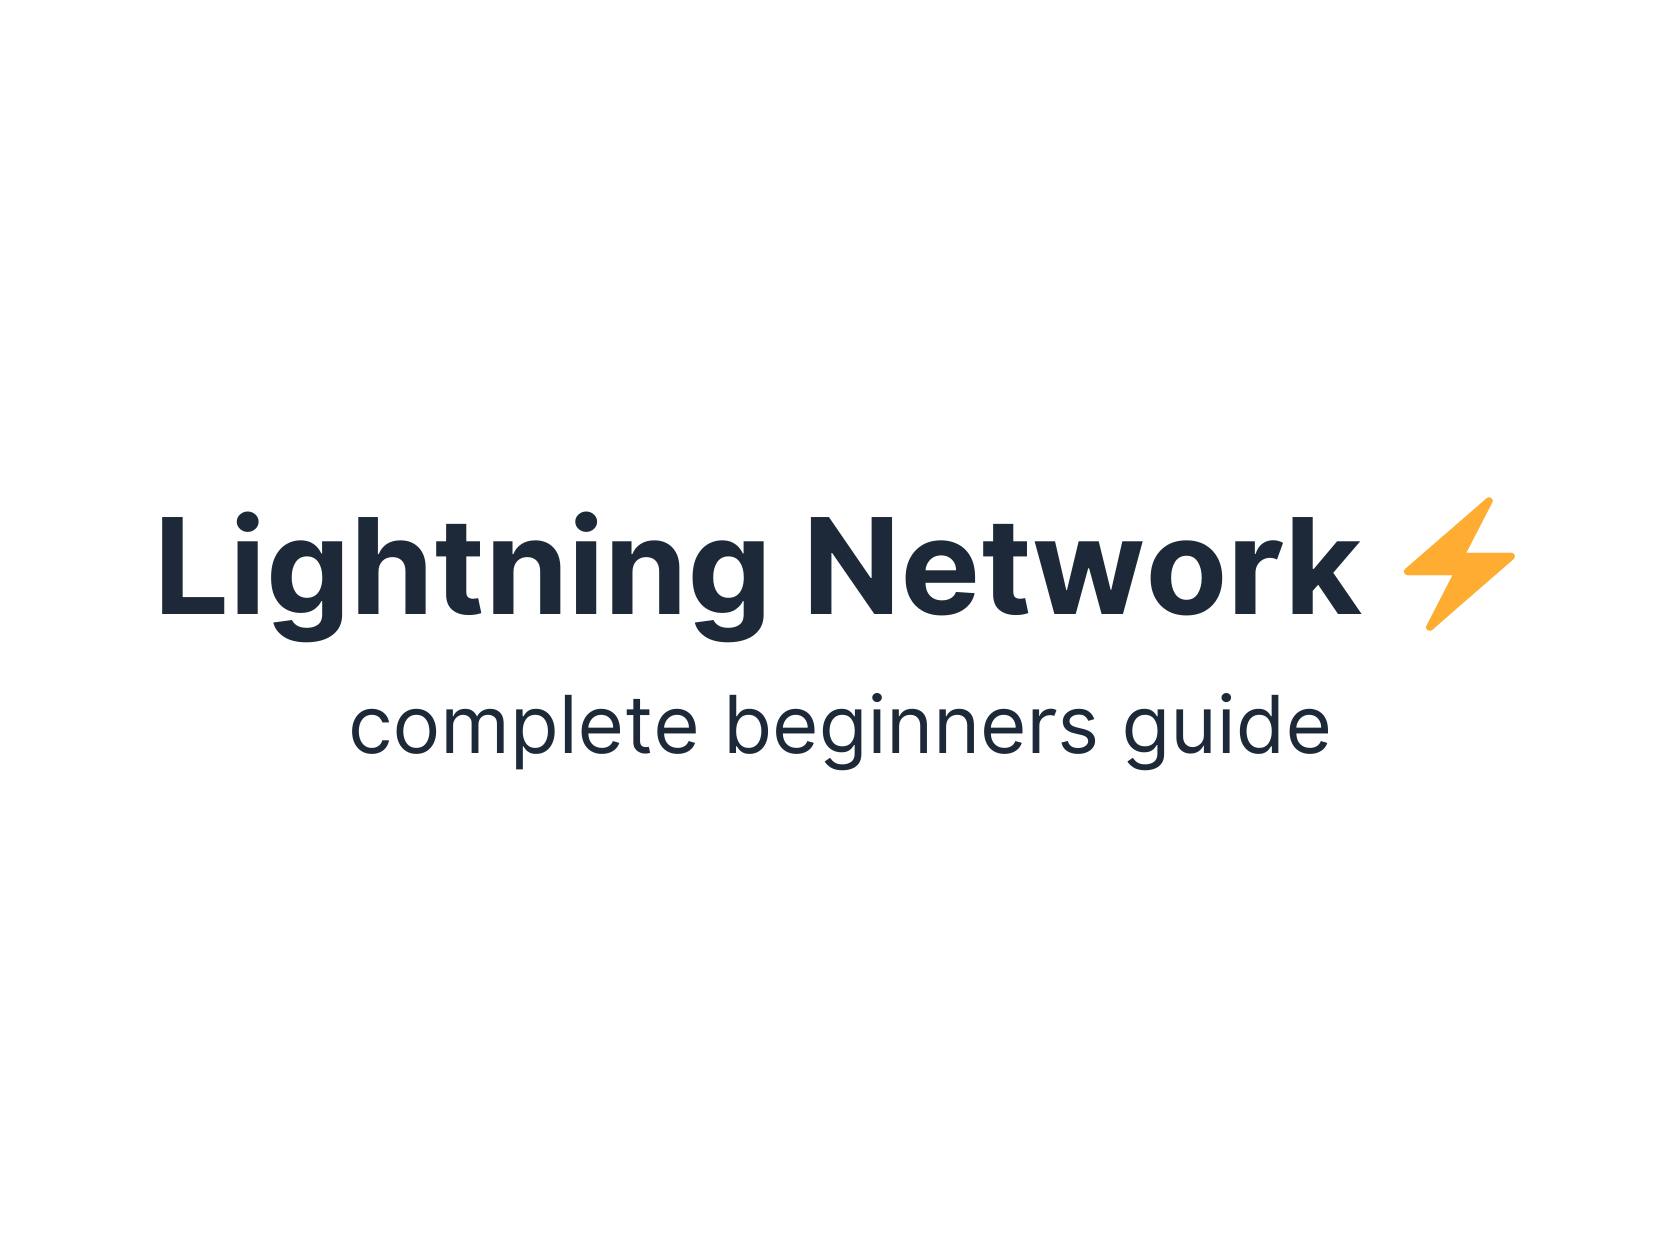 Lightning Network: Complete Beginners Guide